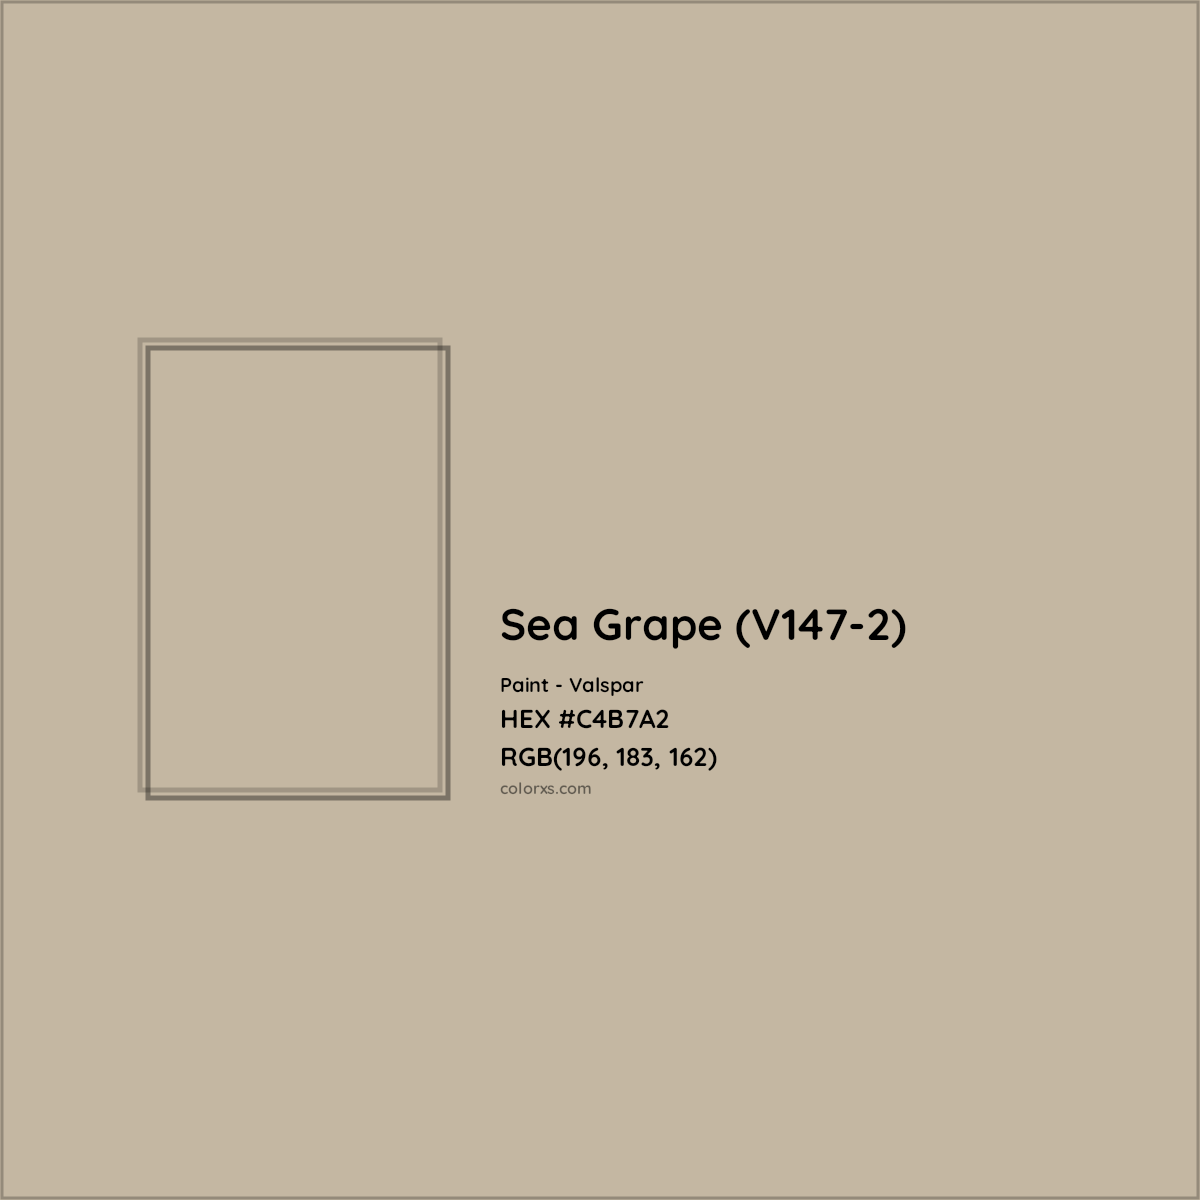 HEX #C4B7A2 Sea Grape (V147-2) Paint Valspar - Color Code